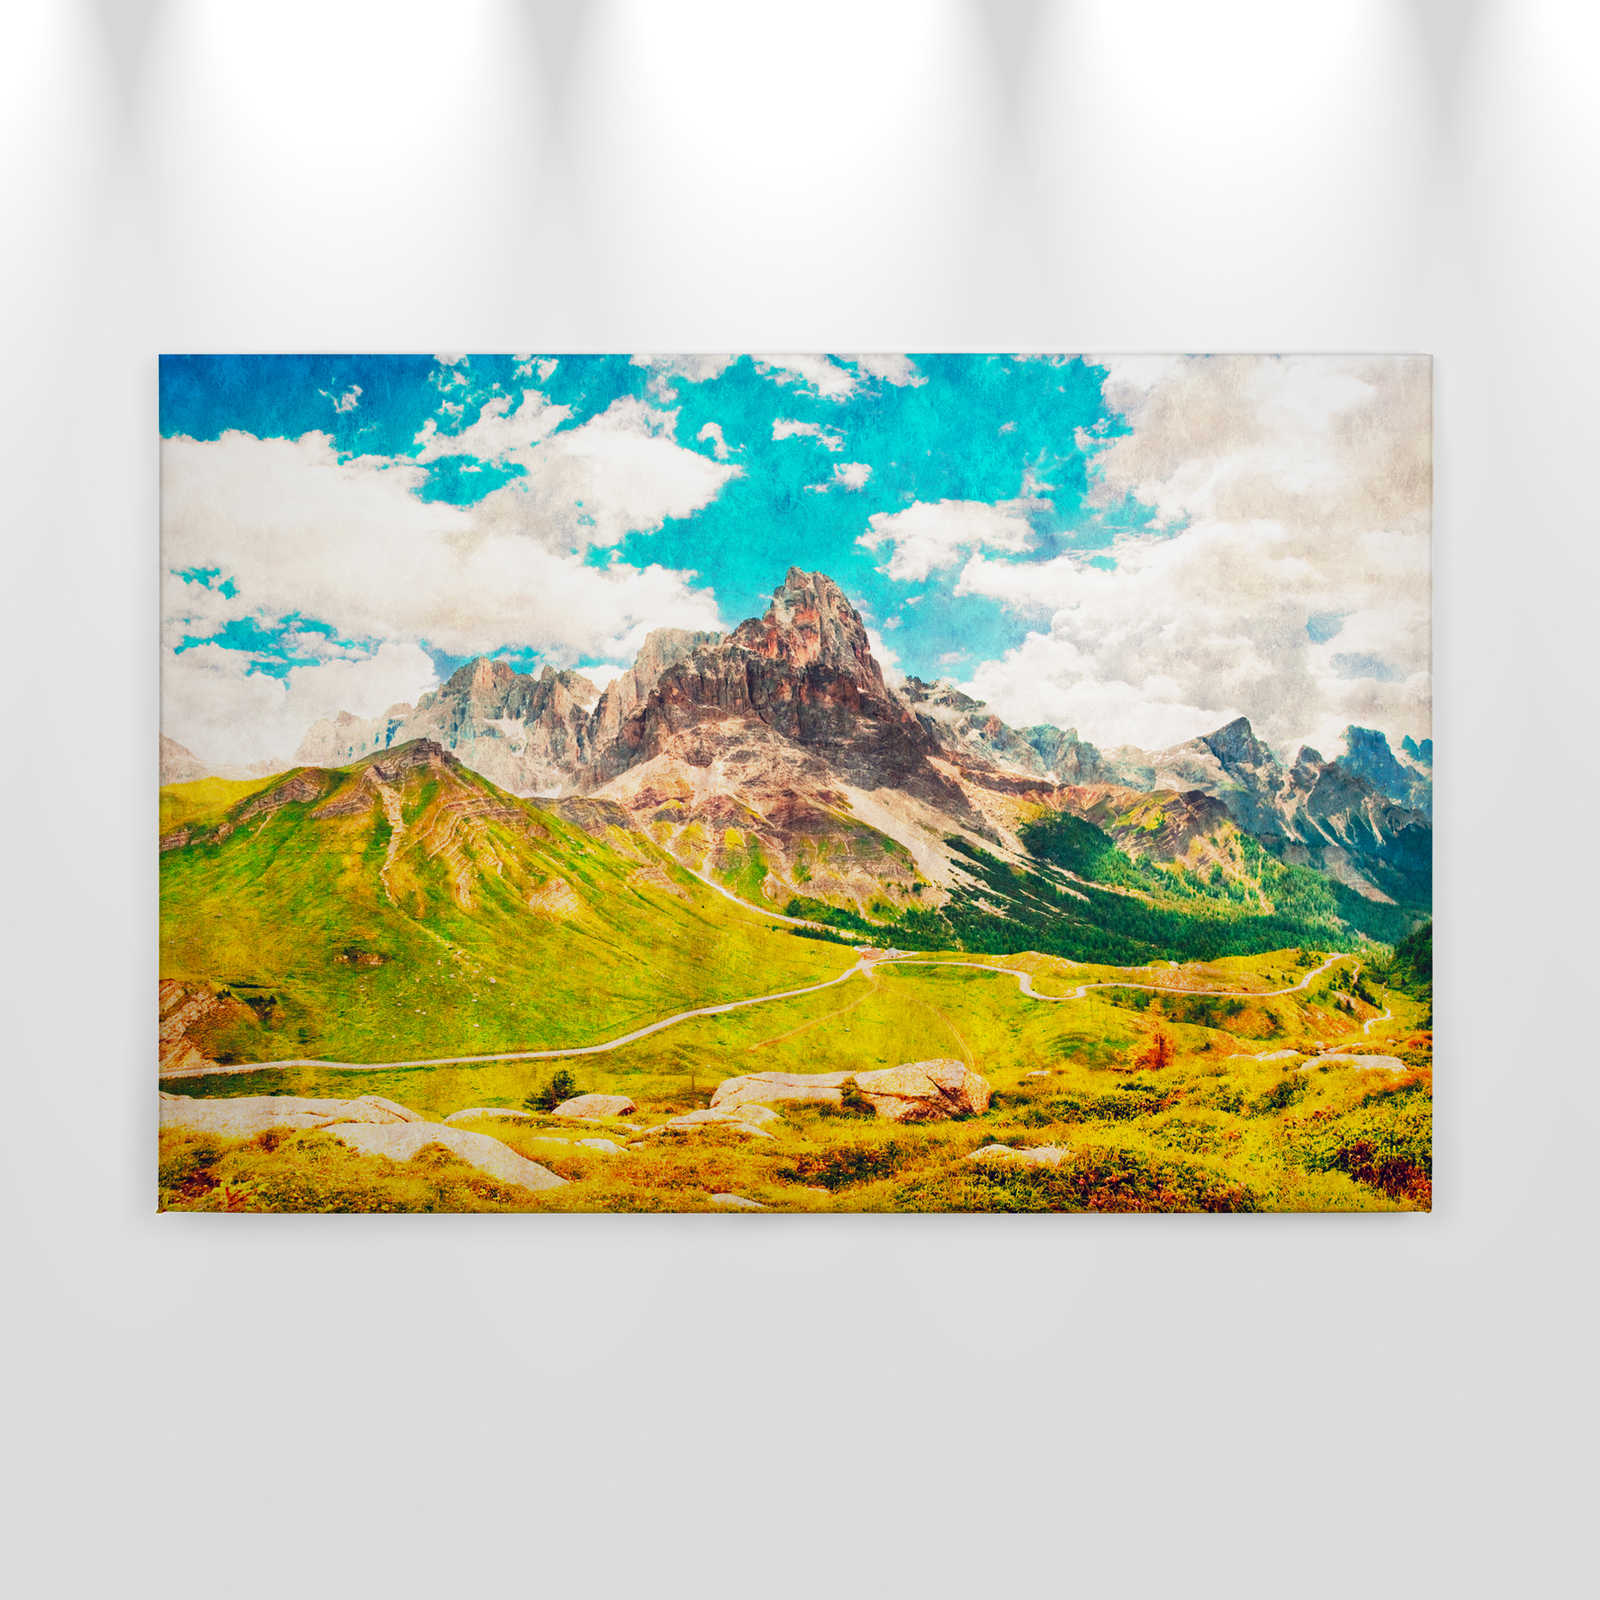             Dolomiti 1 - Cuadro en lienzo Fotografía Retro Dolomitas - Papel secante - 0,90 m x 0,60 m
        